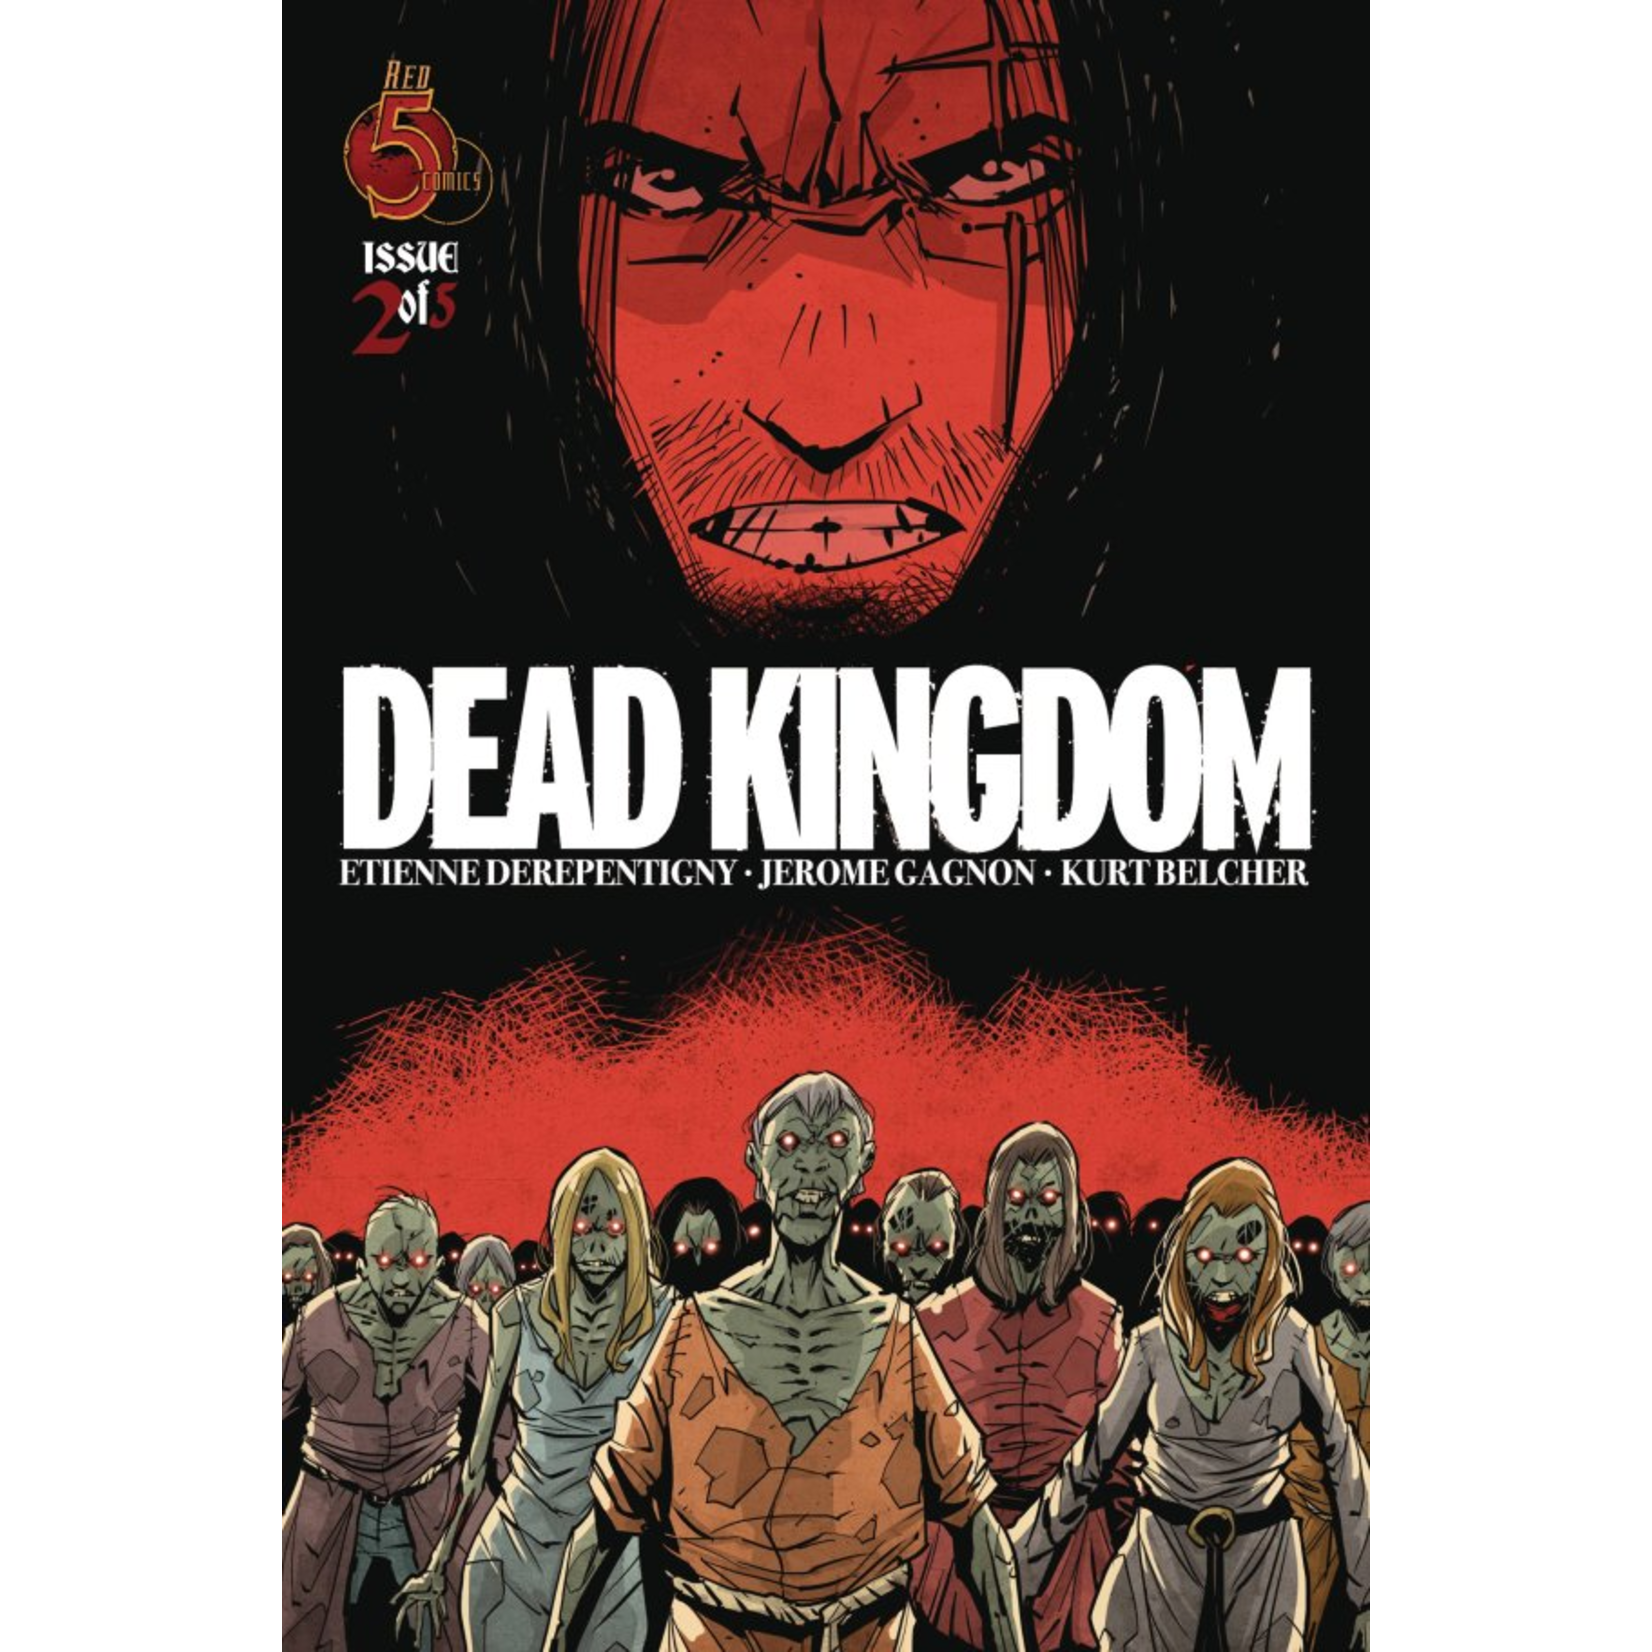 RED 5 COMICS DEAD KINGDOM #2